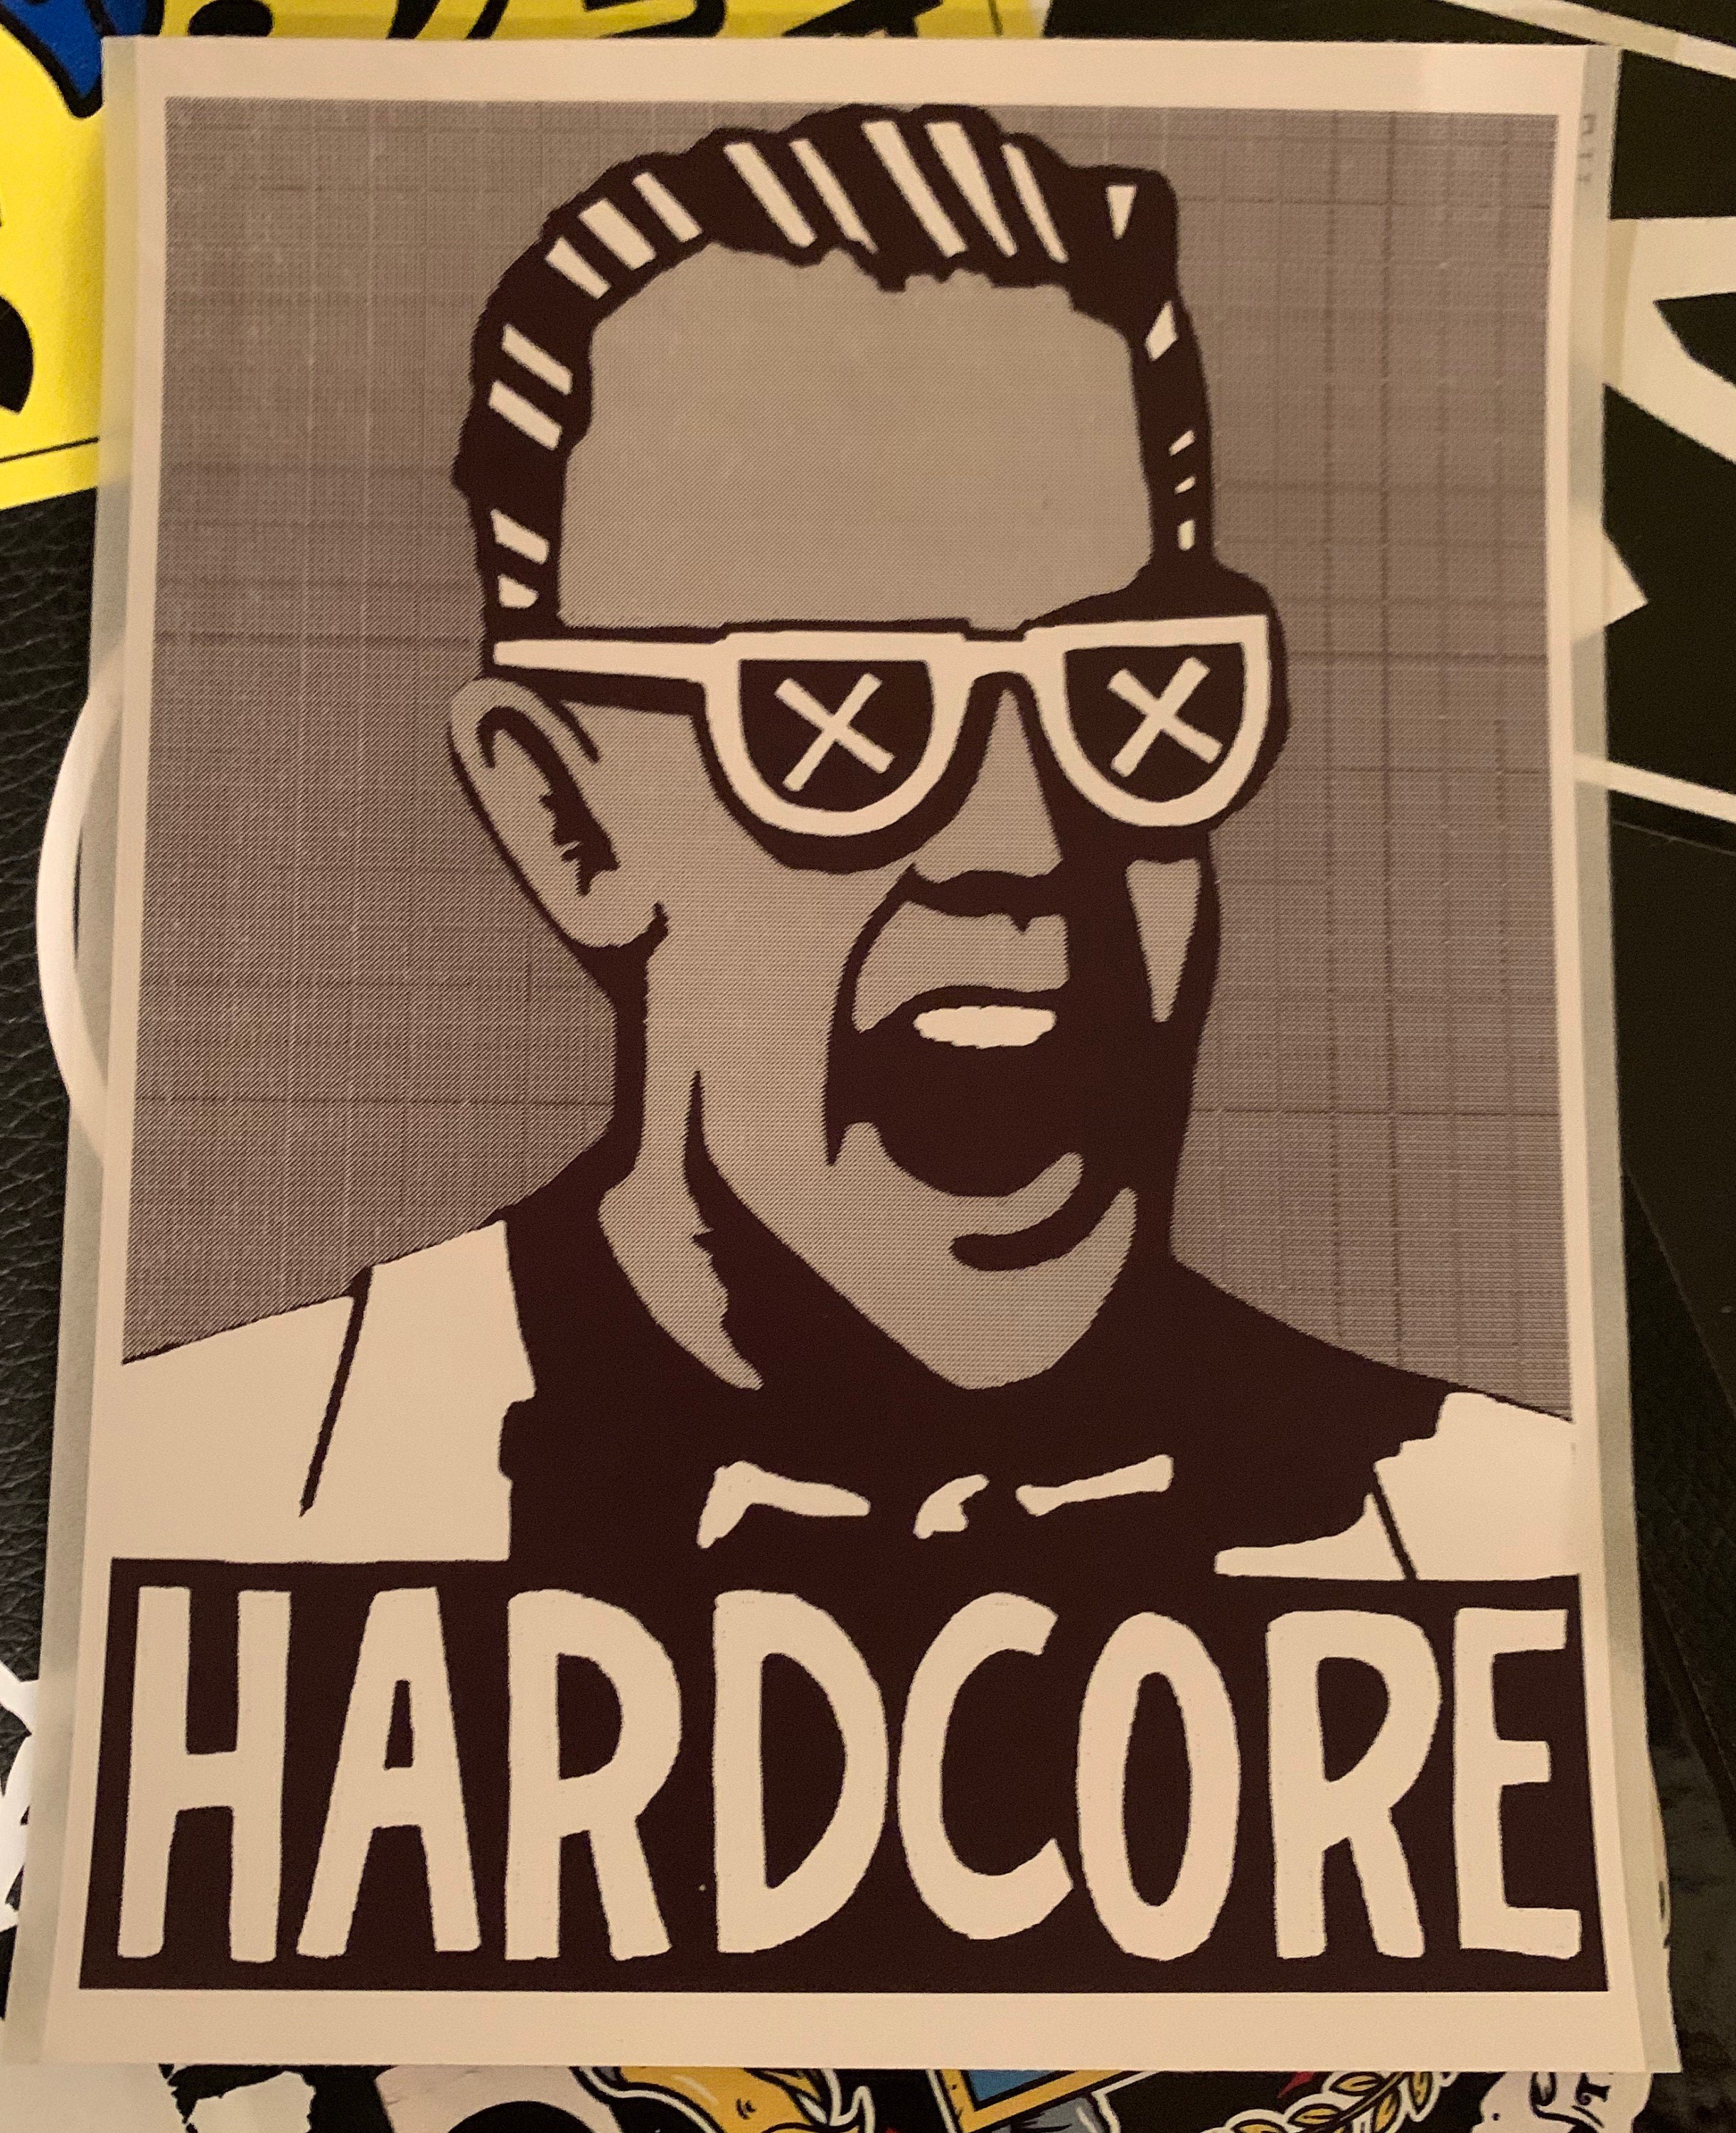 Max-Hardcore